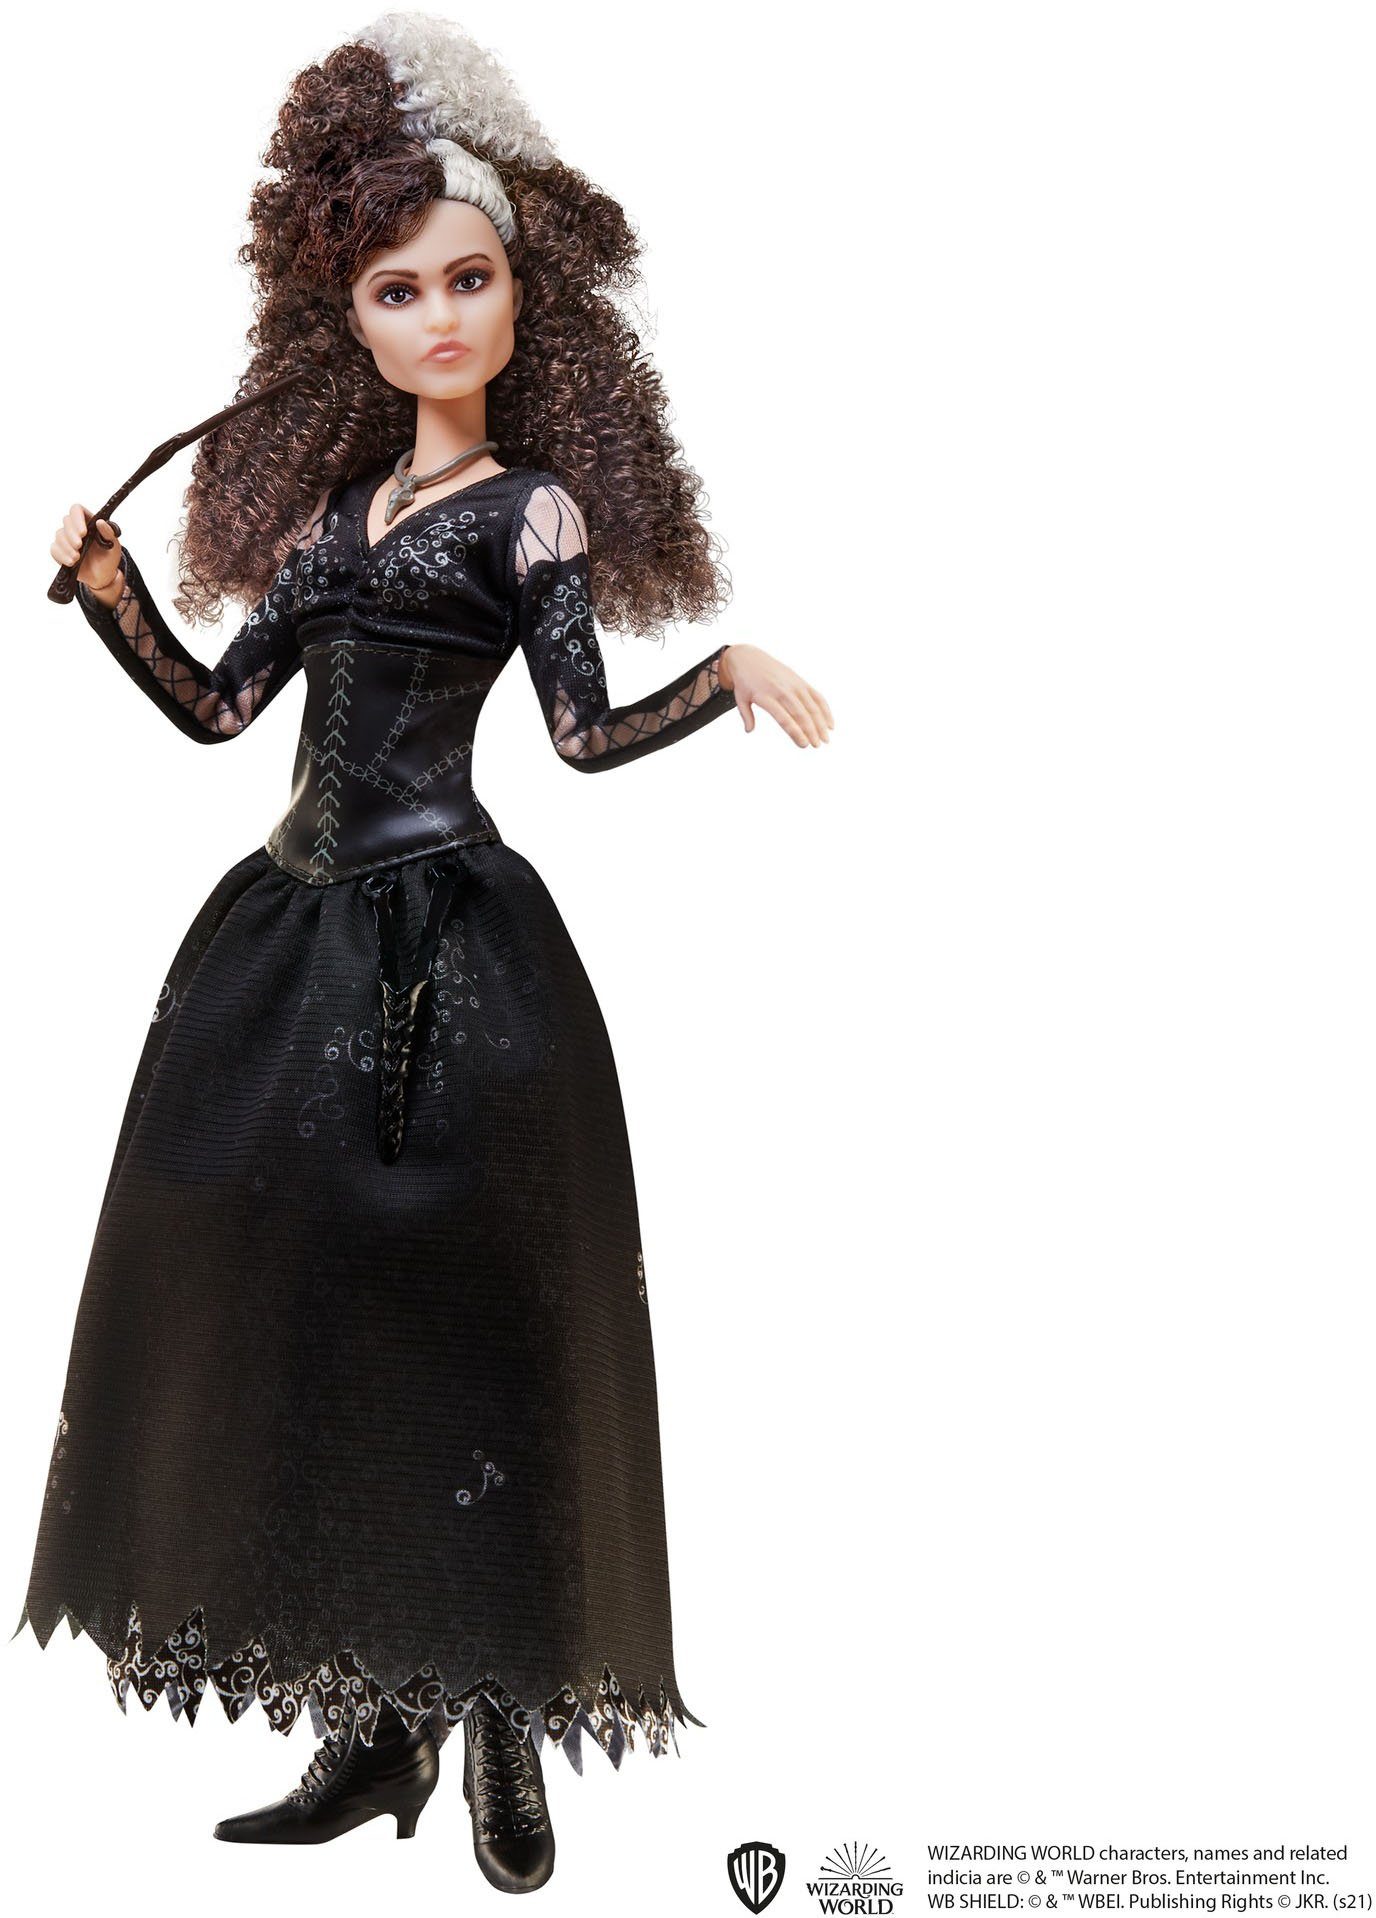 Mattel® Anziehpuppe Bellatrix Lestrange Puppe Mattel HFJ70 Harry Potter  Wizarding World